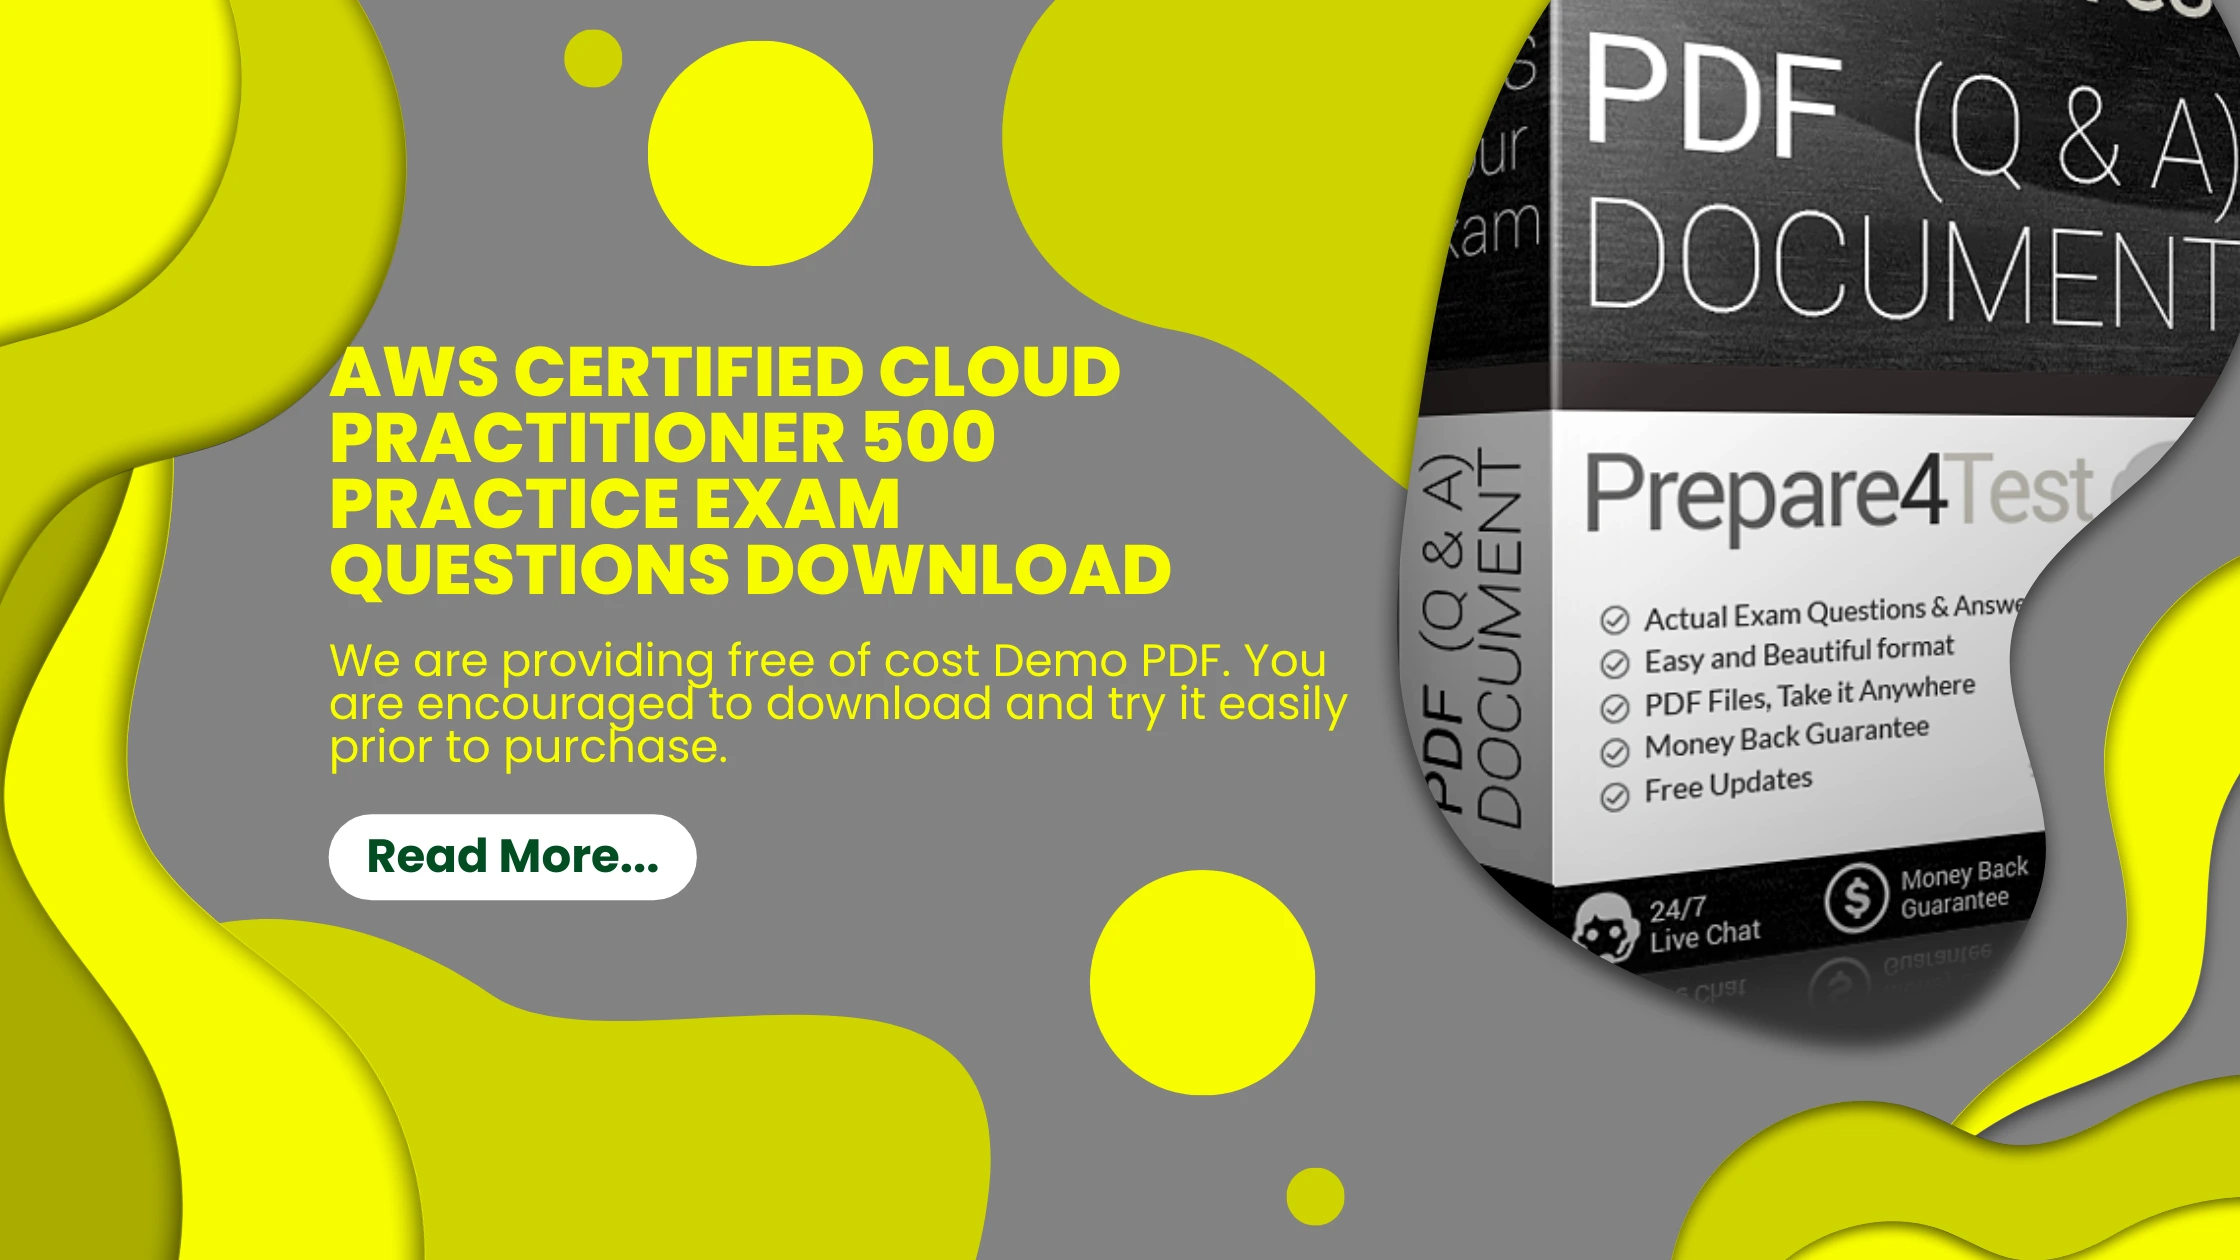 AWS Certified Cloud Practitioner 500 Practice Exam Questions Download guarantee